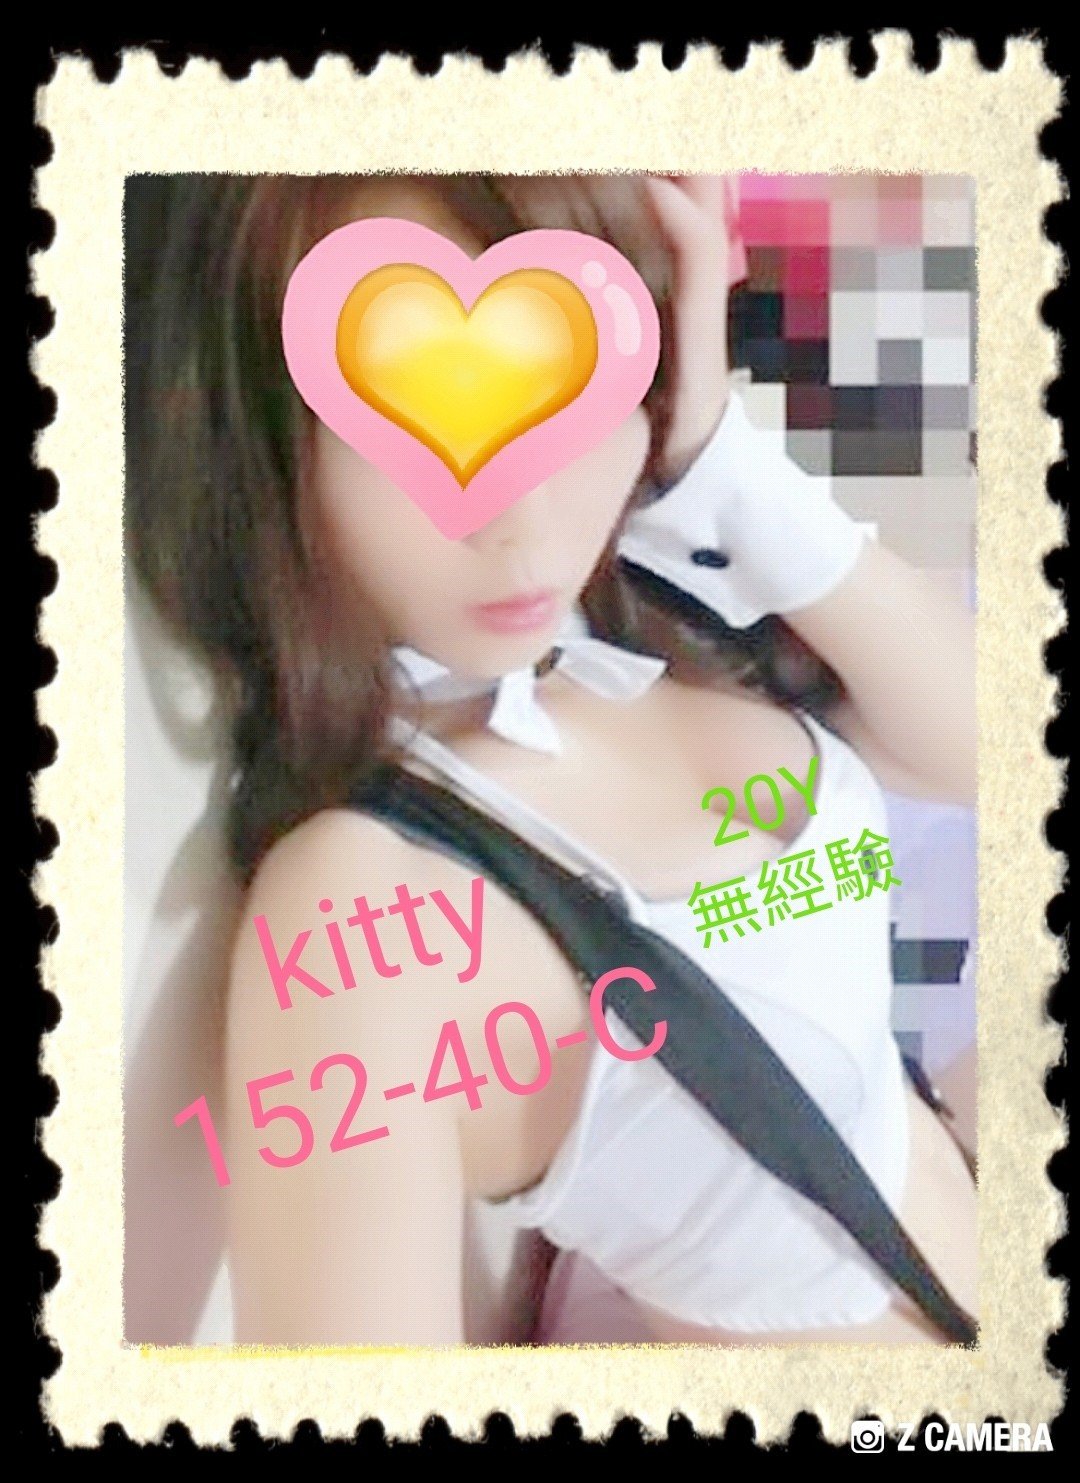 kitty152,40,大C_180523_0001.jpg